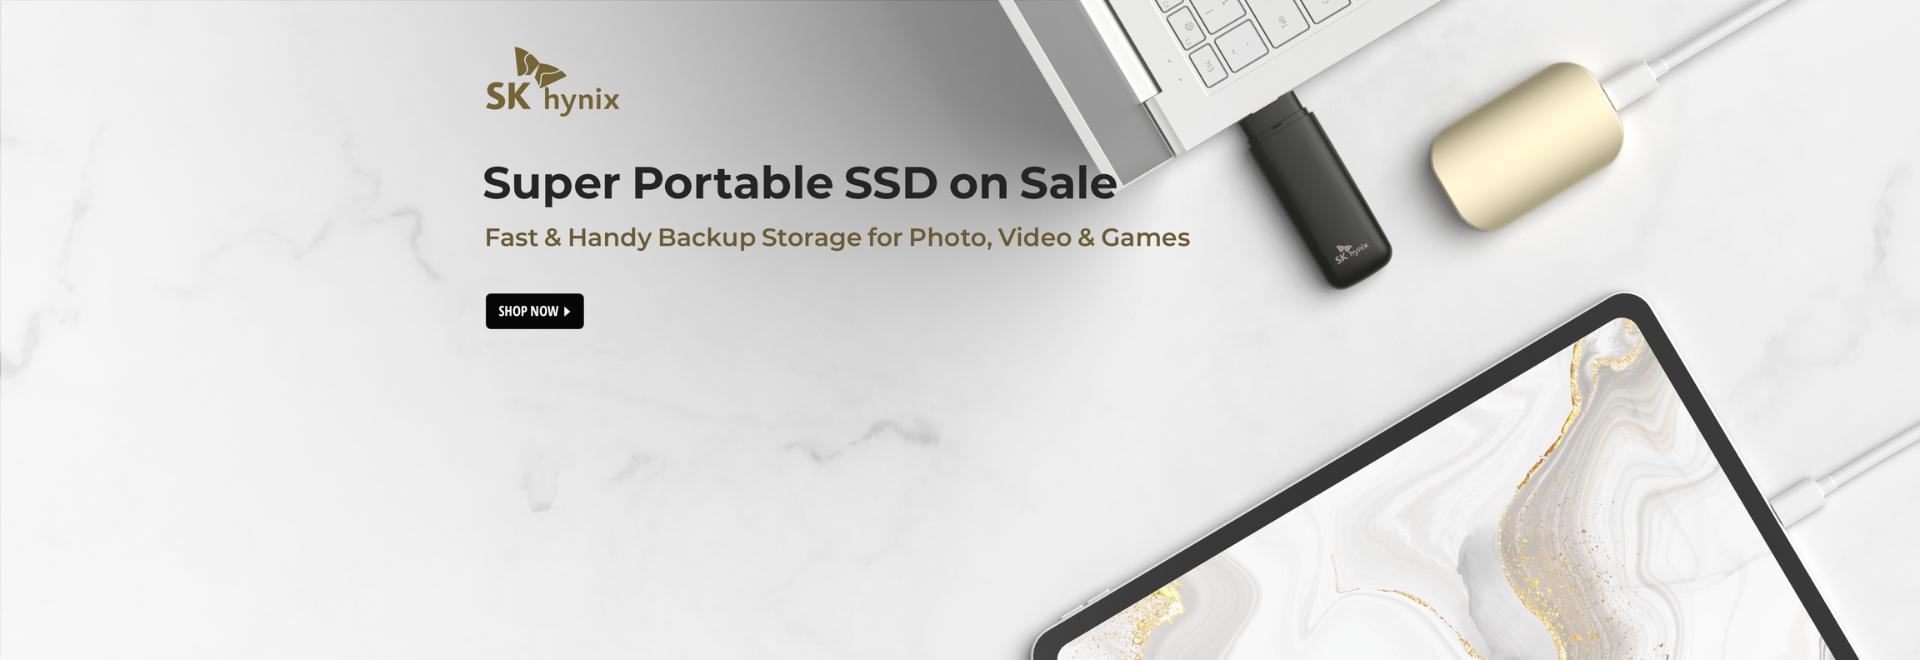  Super Portable SSD on Sale